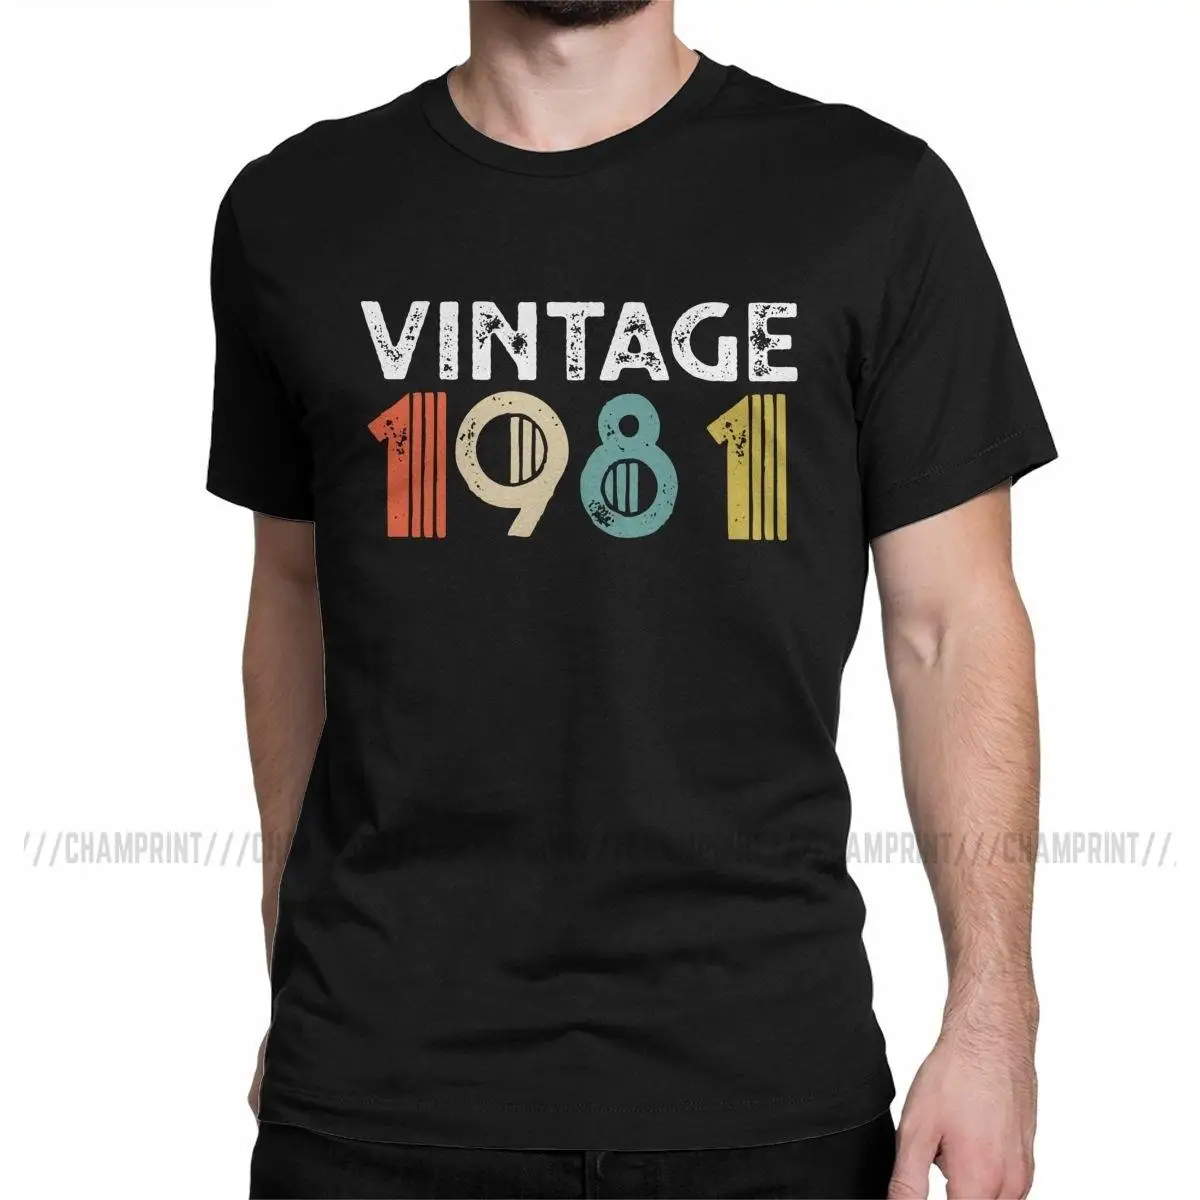 

Vintage 1981 40th Birthday Men T Shirt Fun Tee Shirt Short Sleeve O Neck T-Shirts Cotton New Arrival Tops